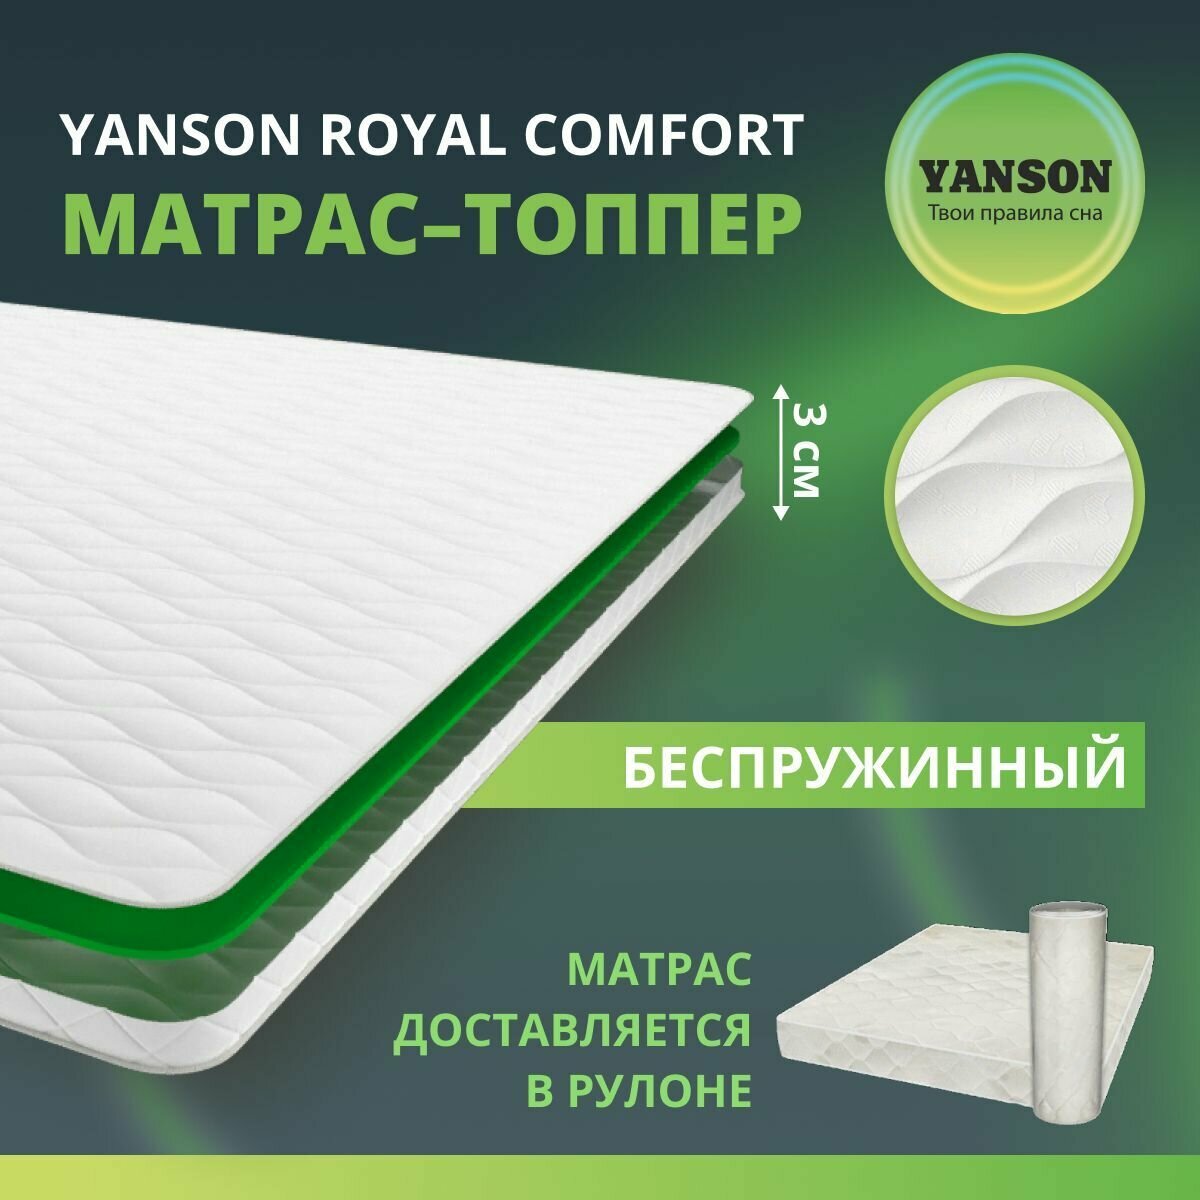 YANSON Royal Comfort 80-200